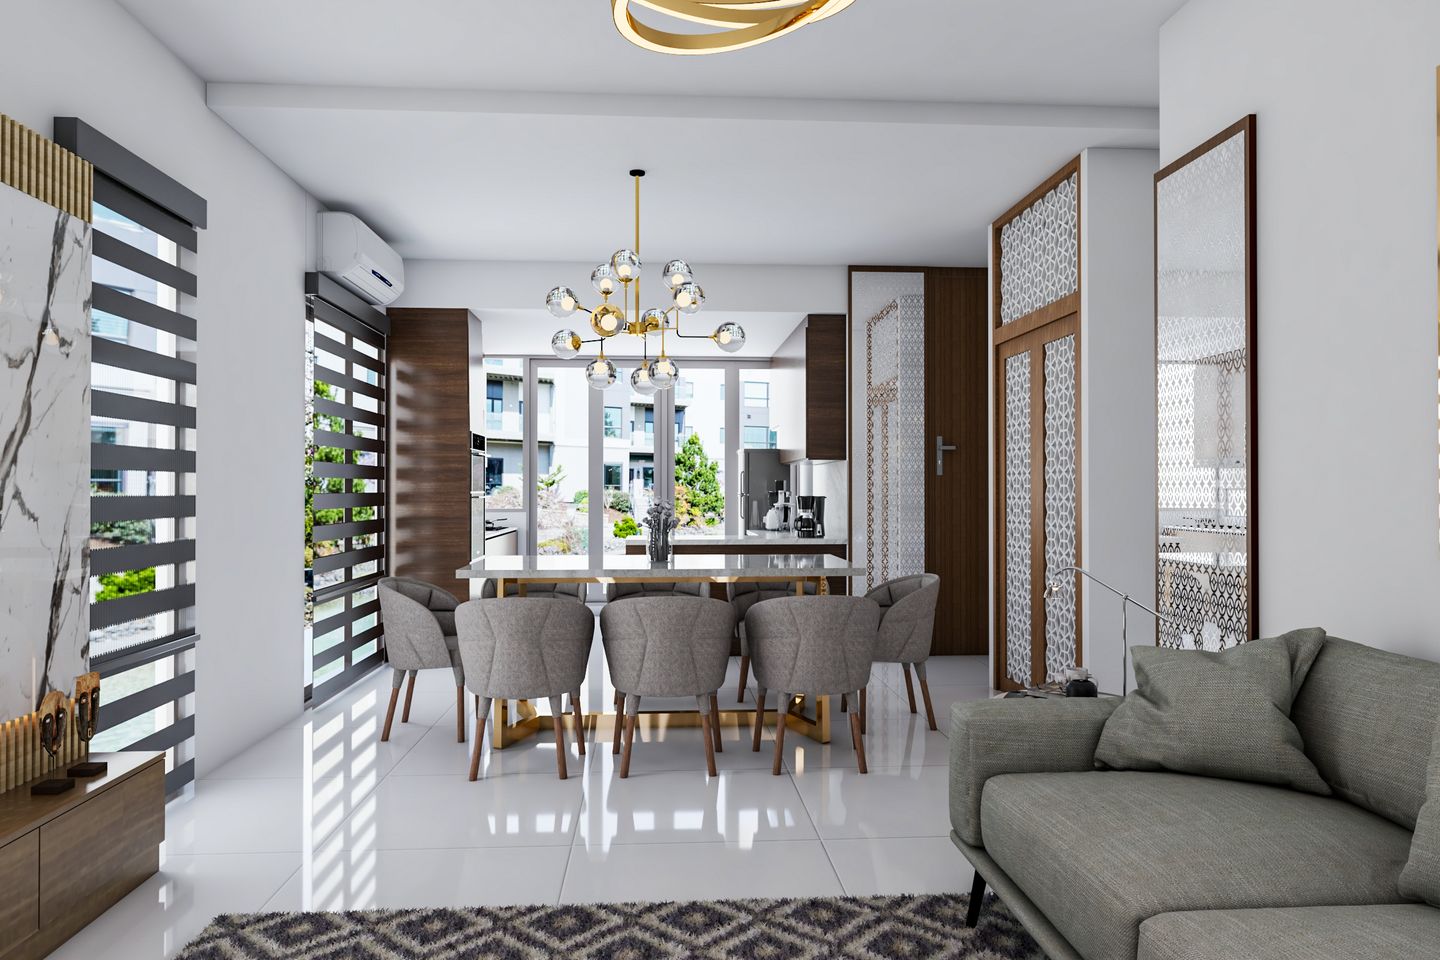 Contemporary Dining Room Design For Rental Homes - Livspace